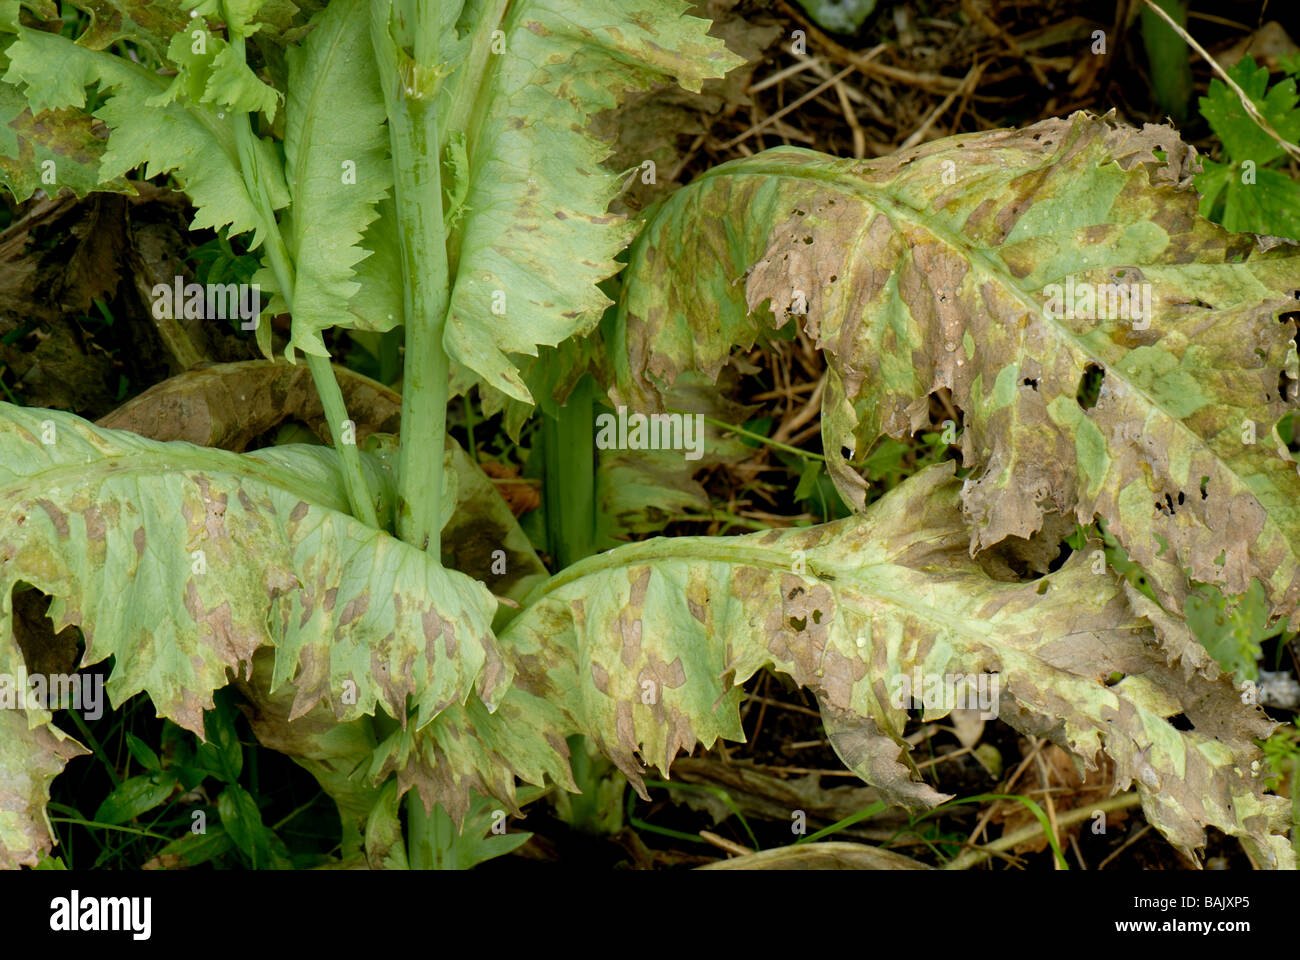 Downy mildew Peronospora arborescens symptoms on opium poppy Papaver somniferum leaves Stock Photo